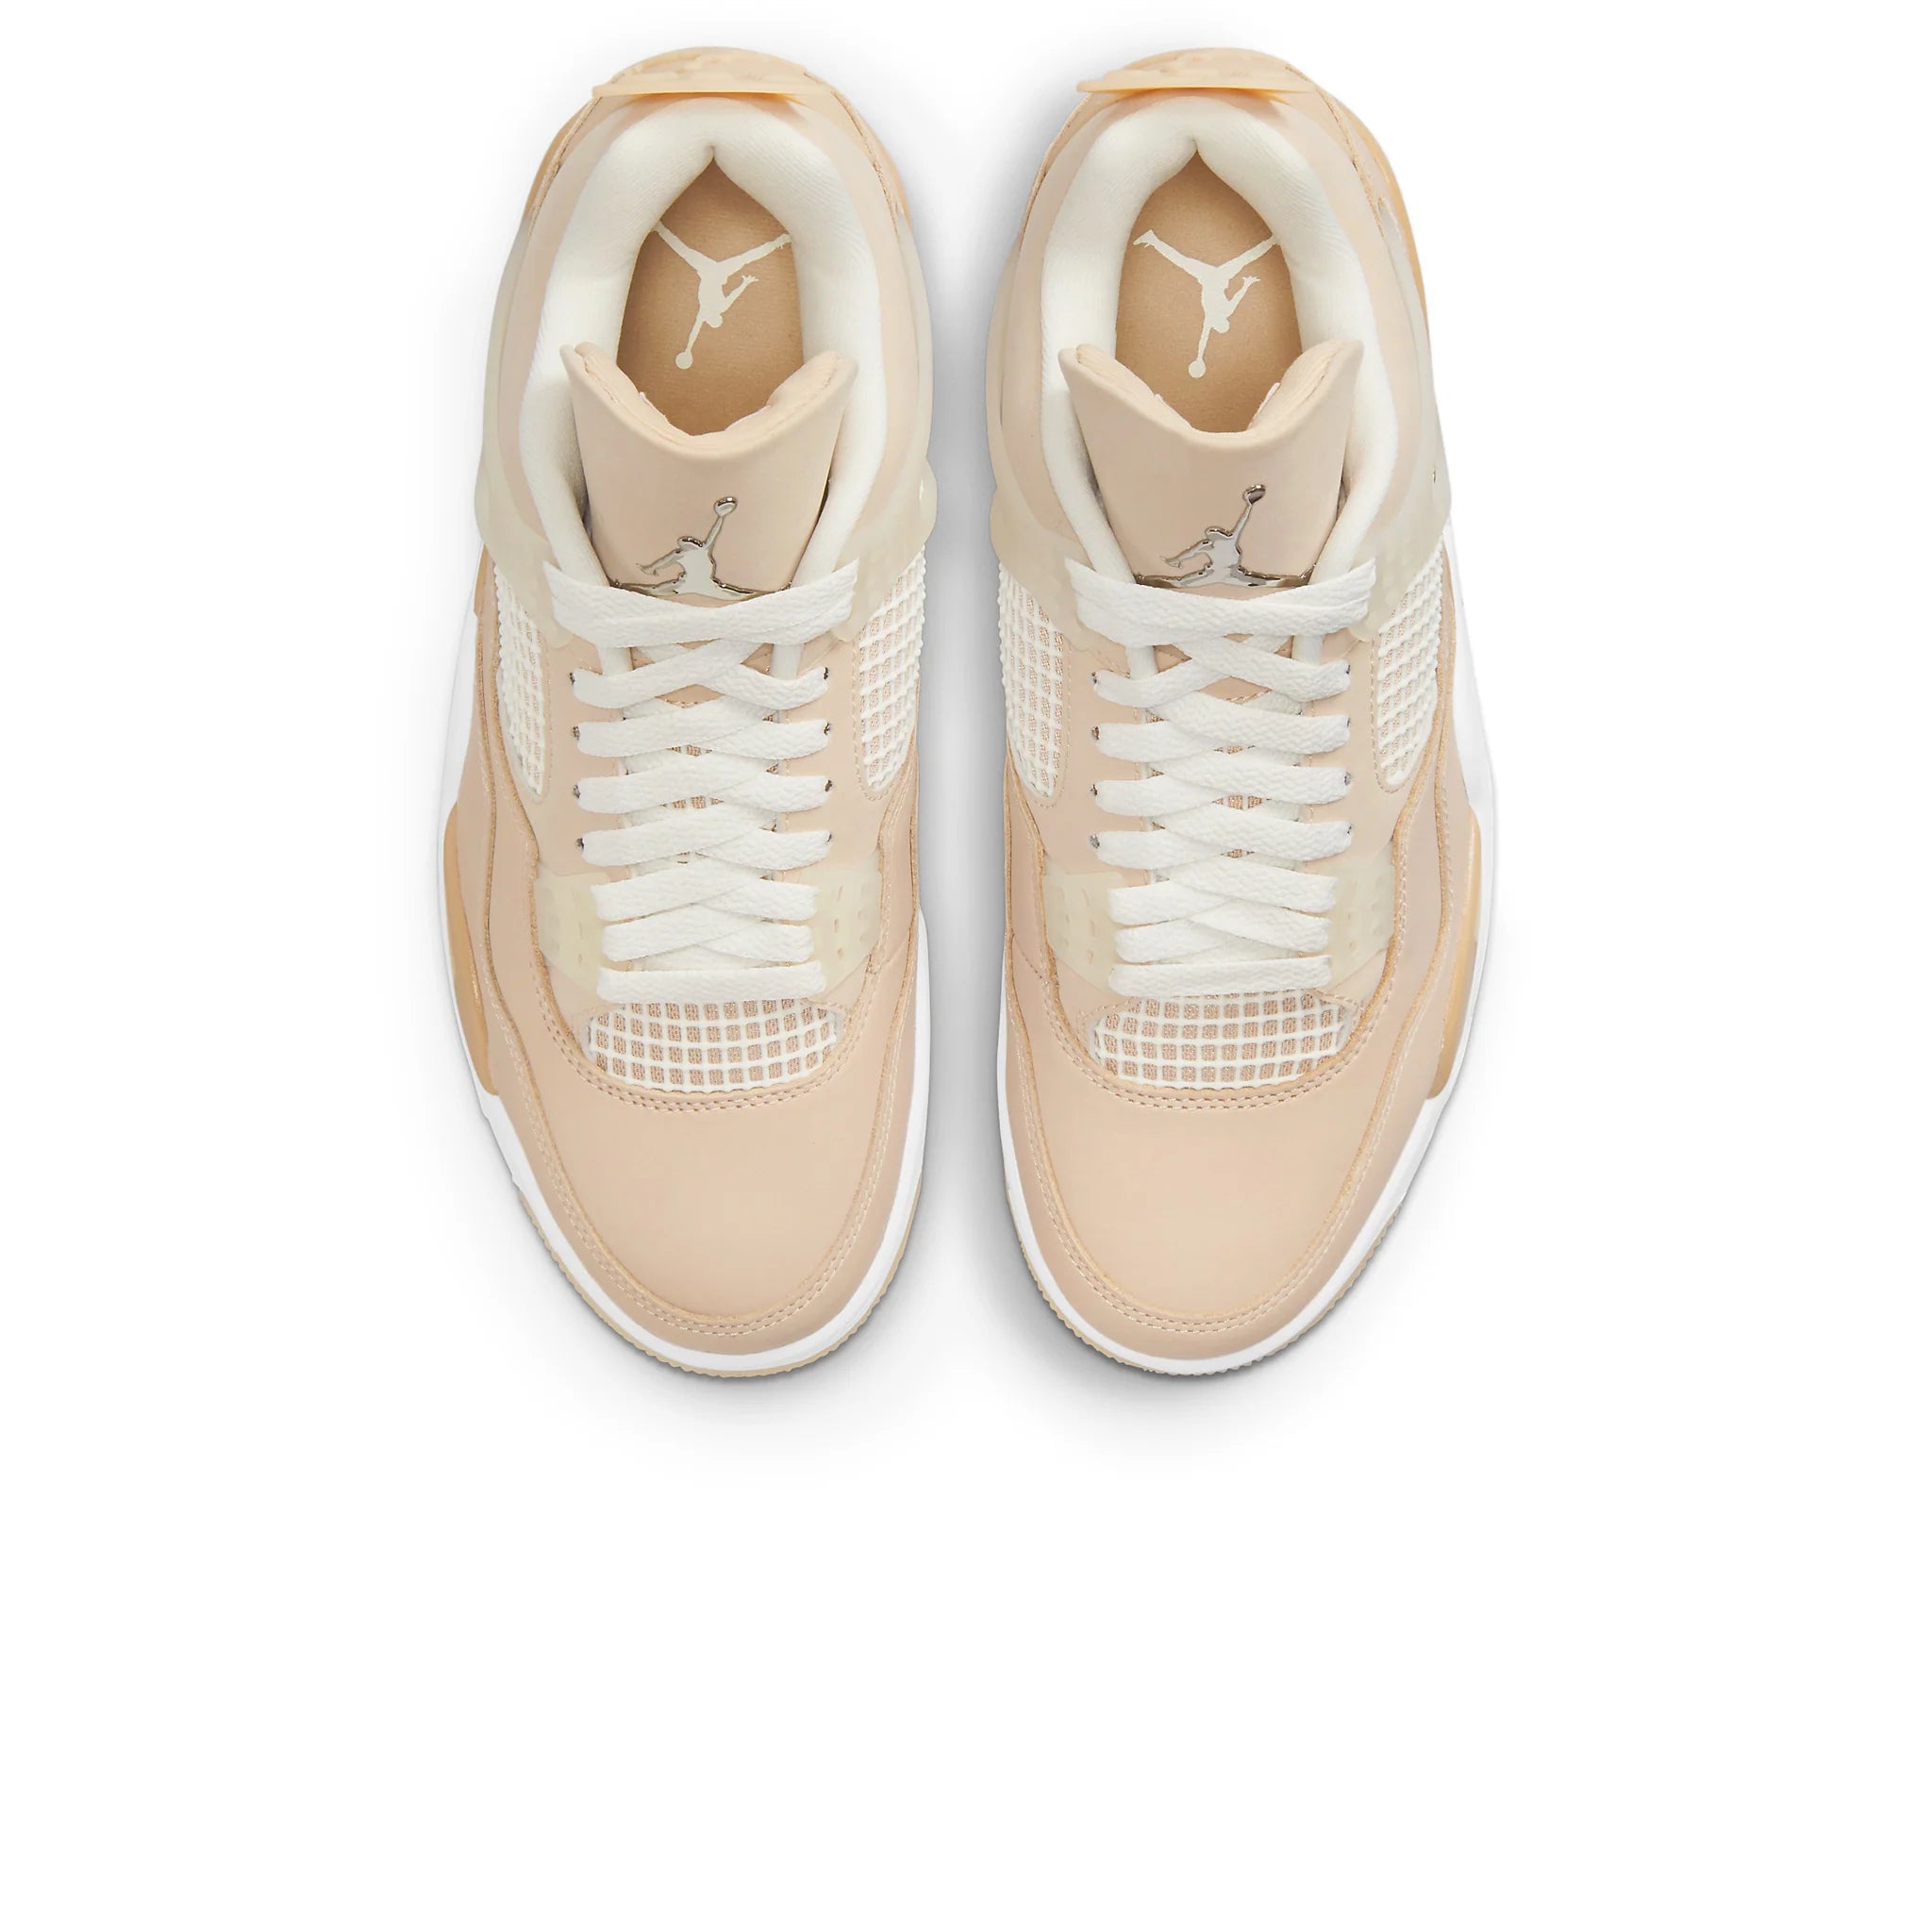 Nike Air Jordan 4 'Shimmers' - Clipped AU